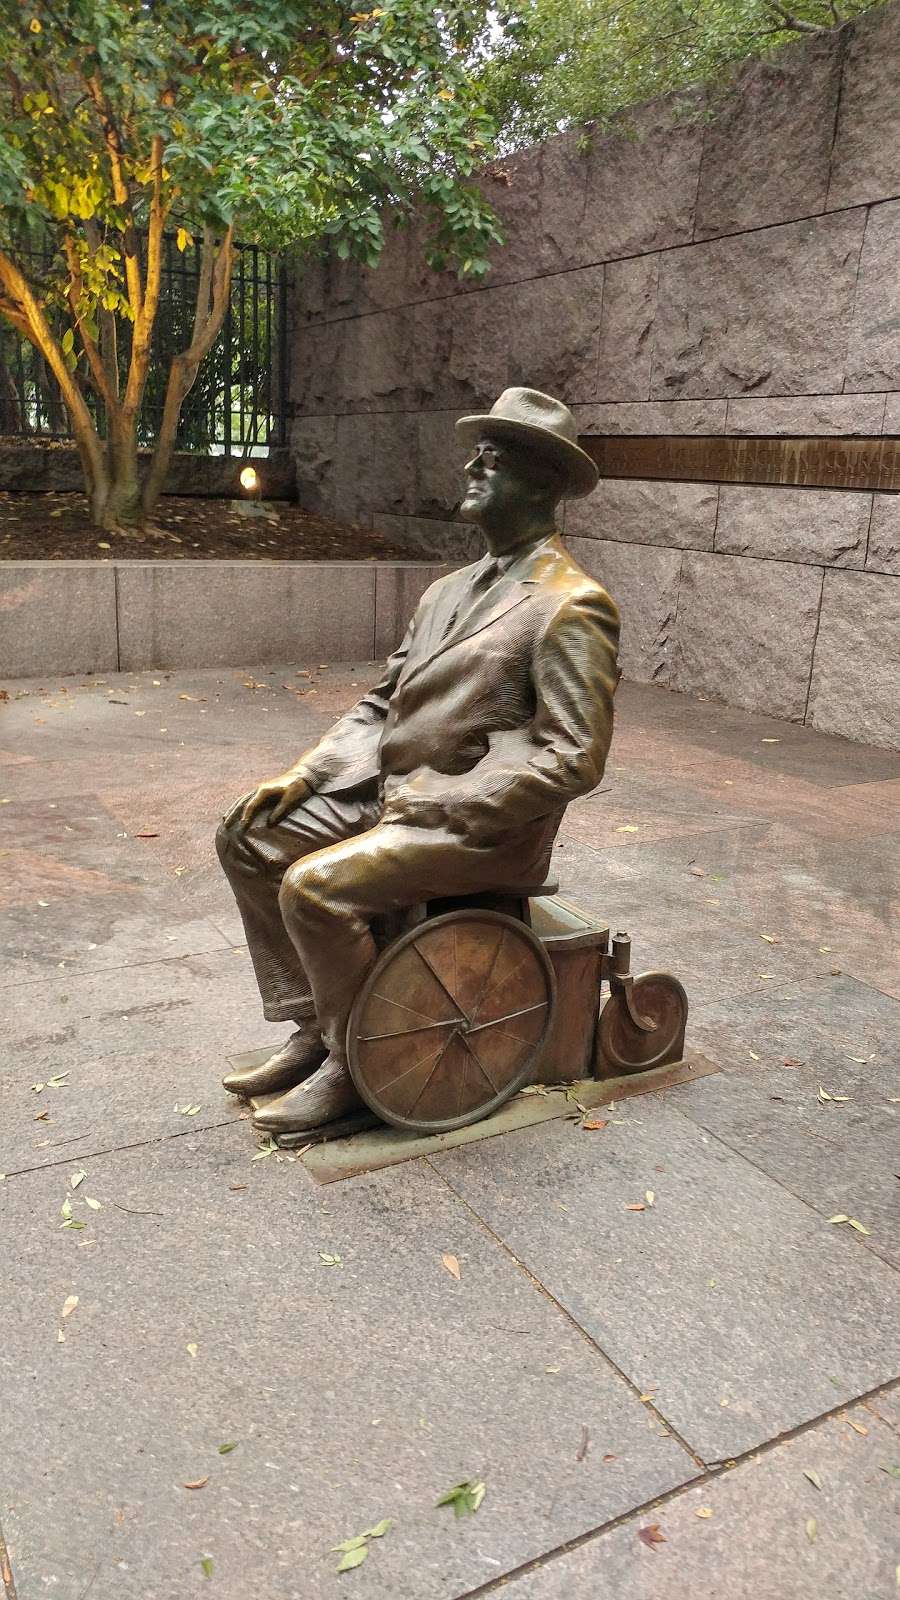 Franklin Delano Roosevelt Memorial | Washington, DC, USA